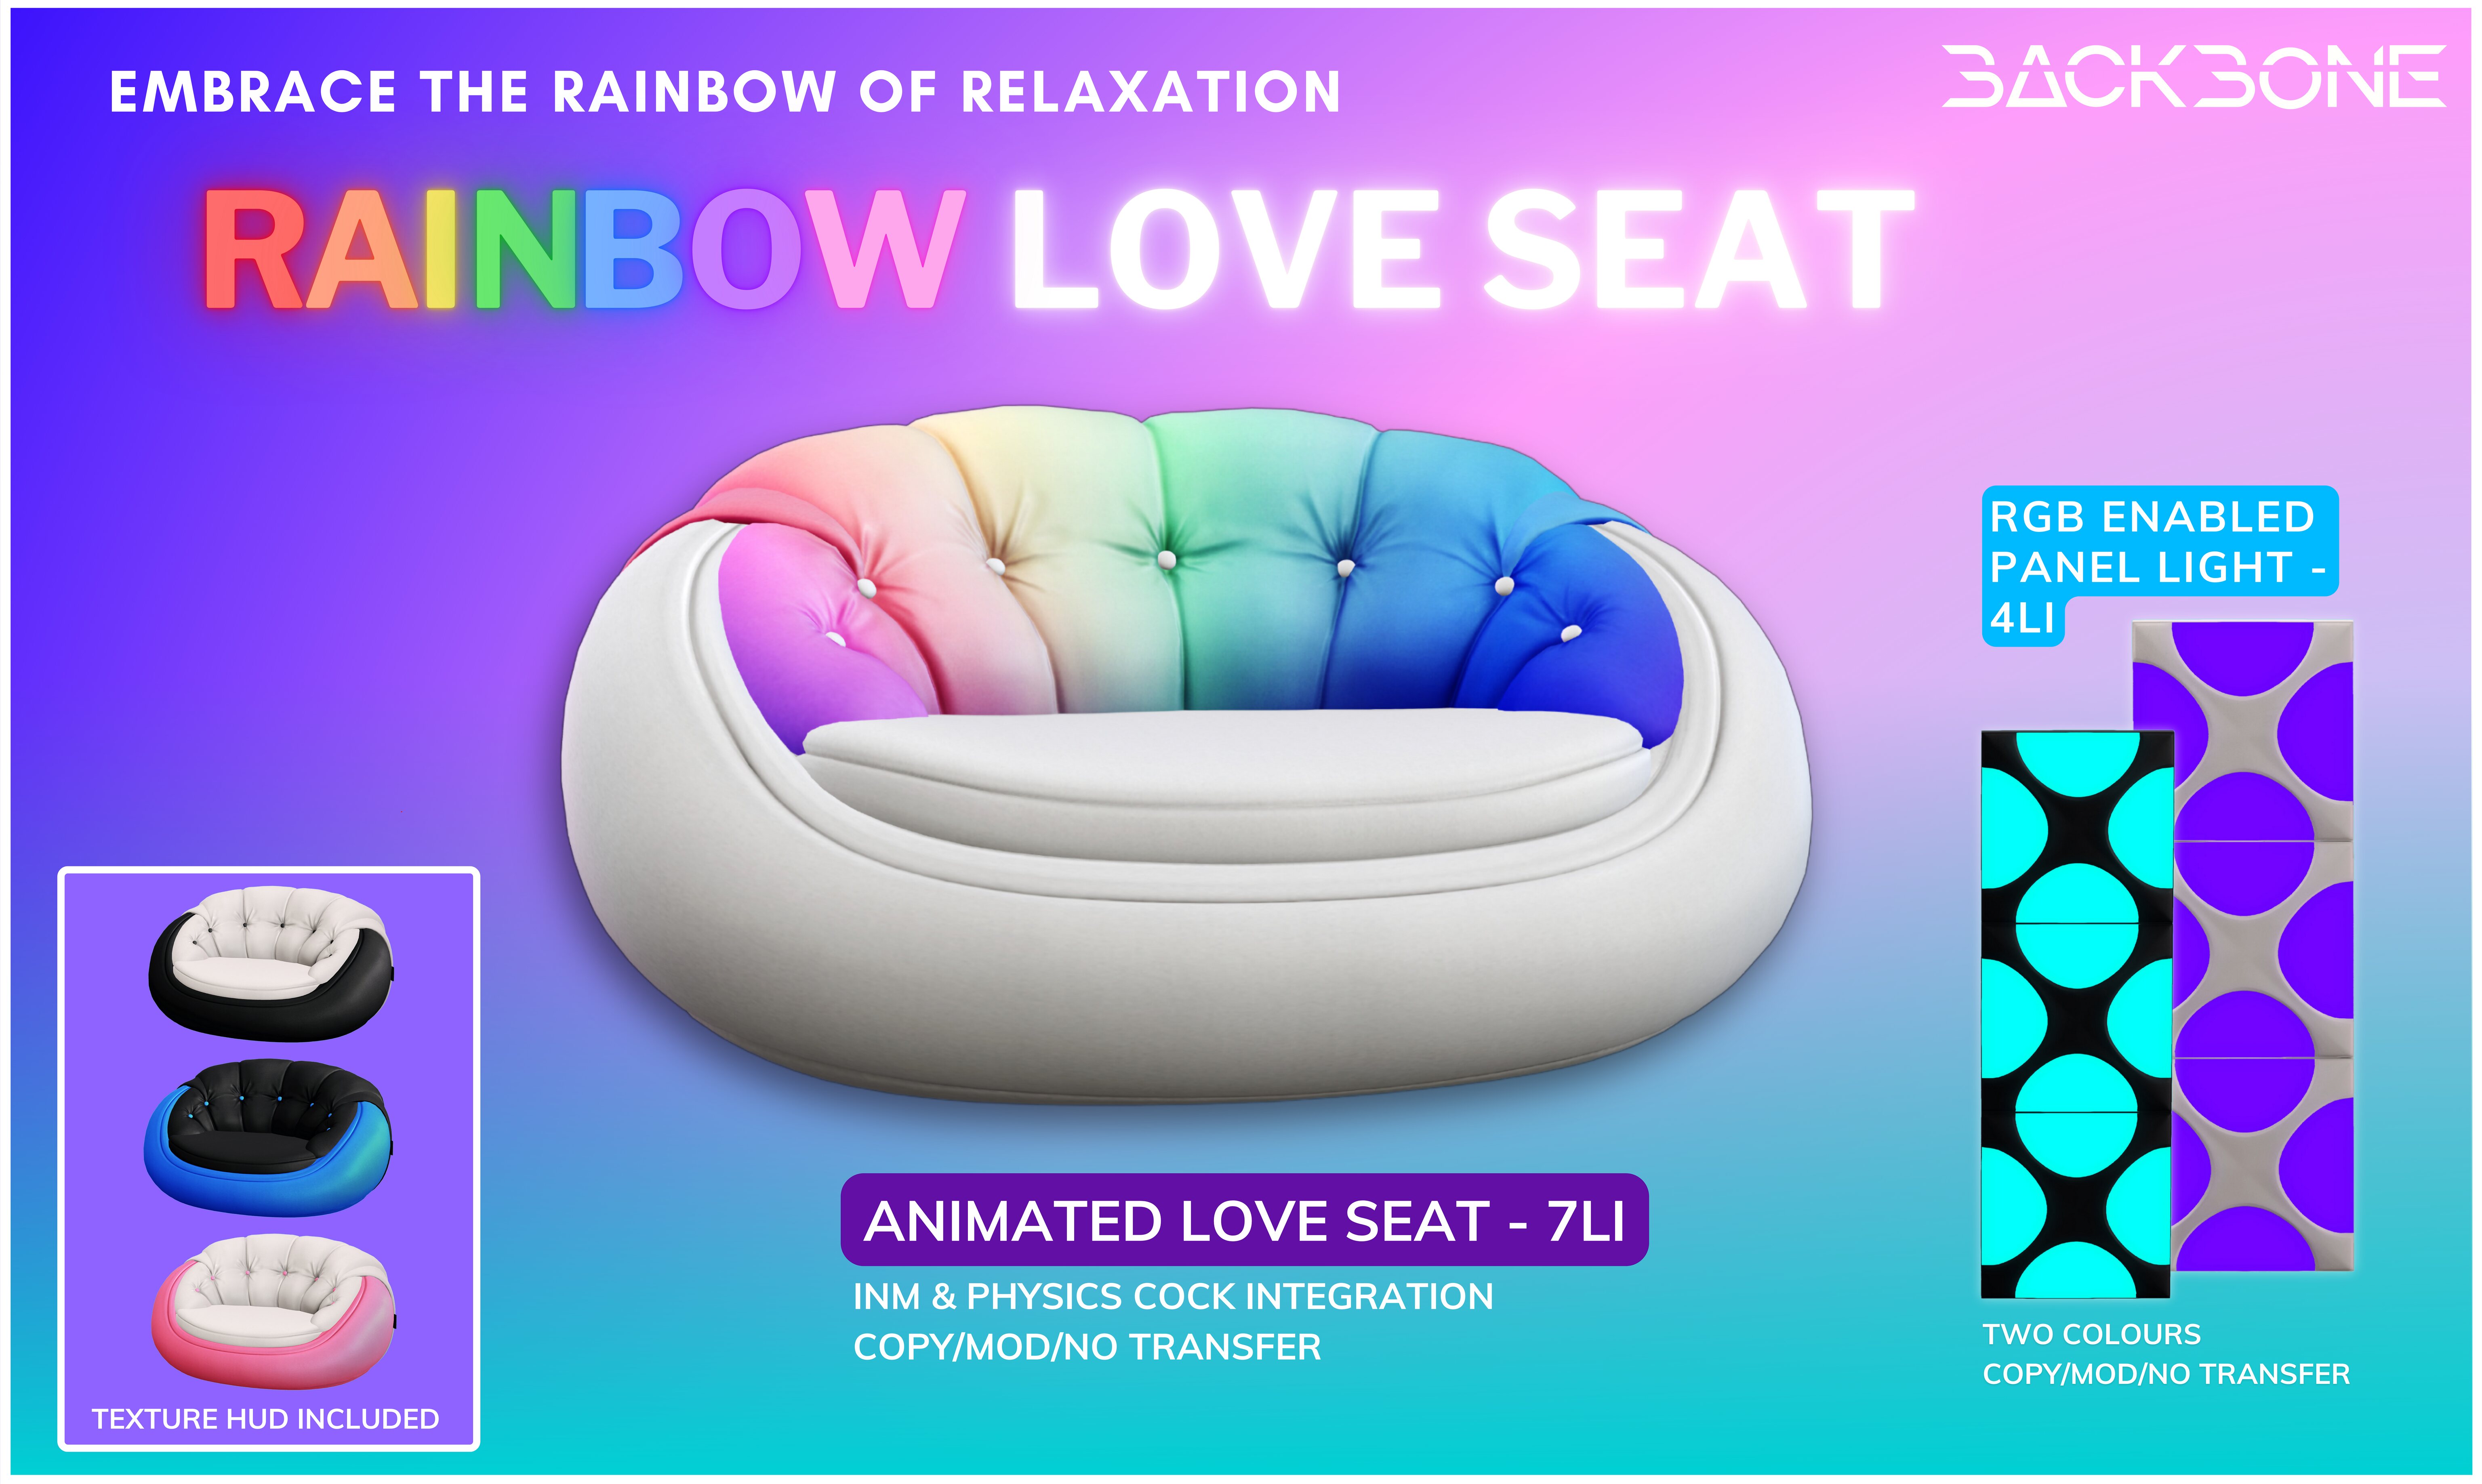 BackBone – Rainbow Love Seat